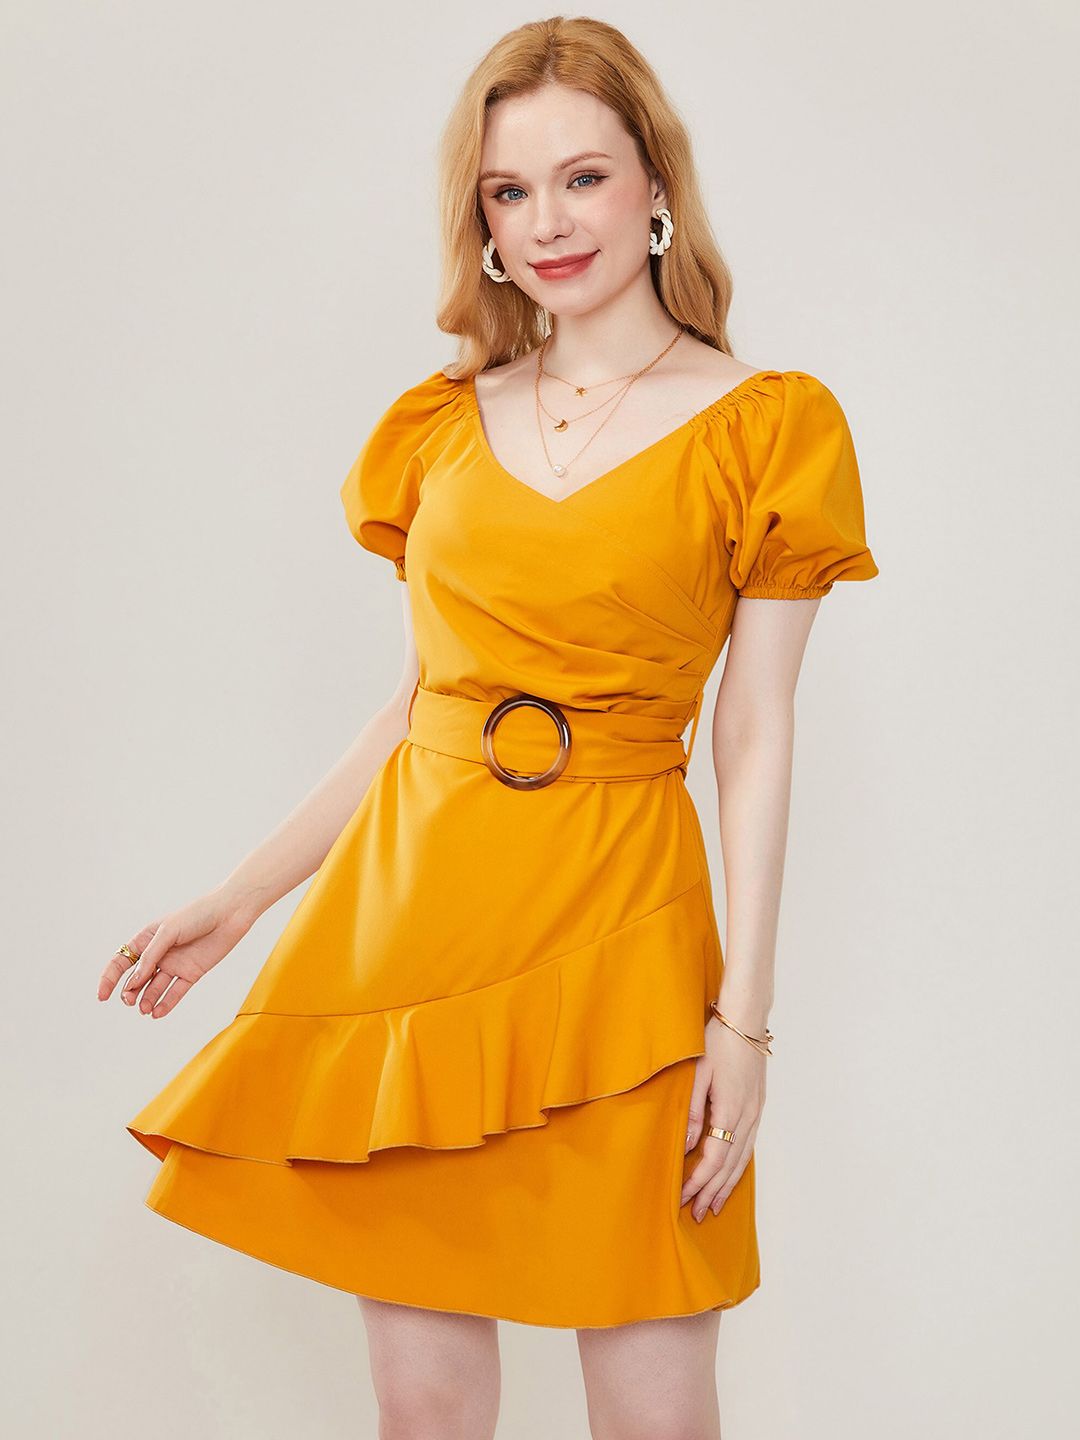 URBANIC Yellow Dress Price in India